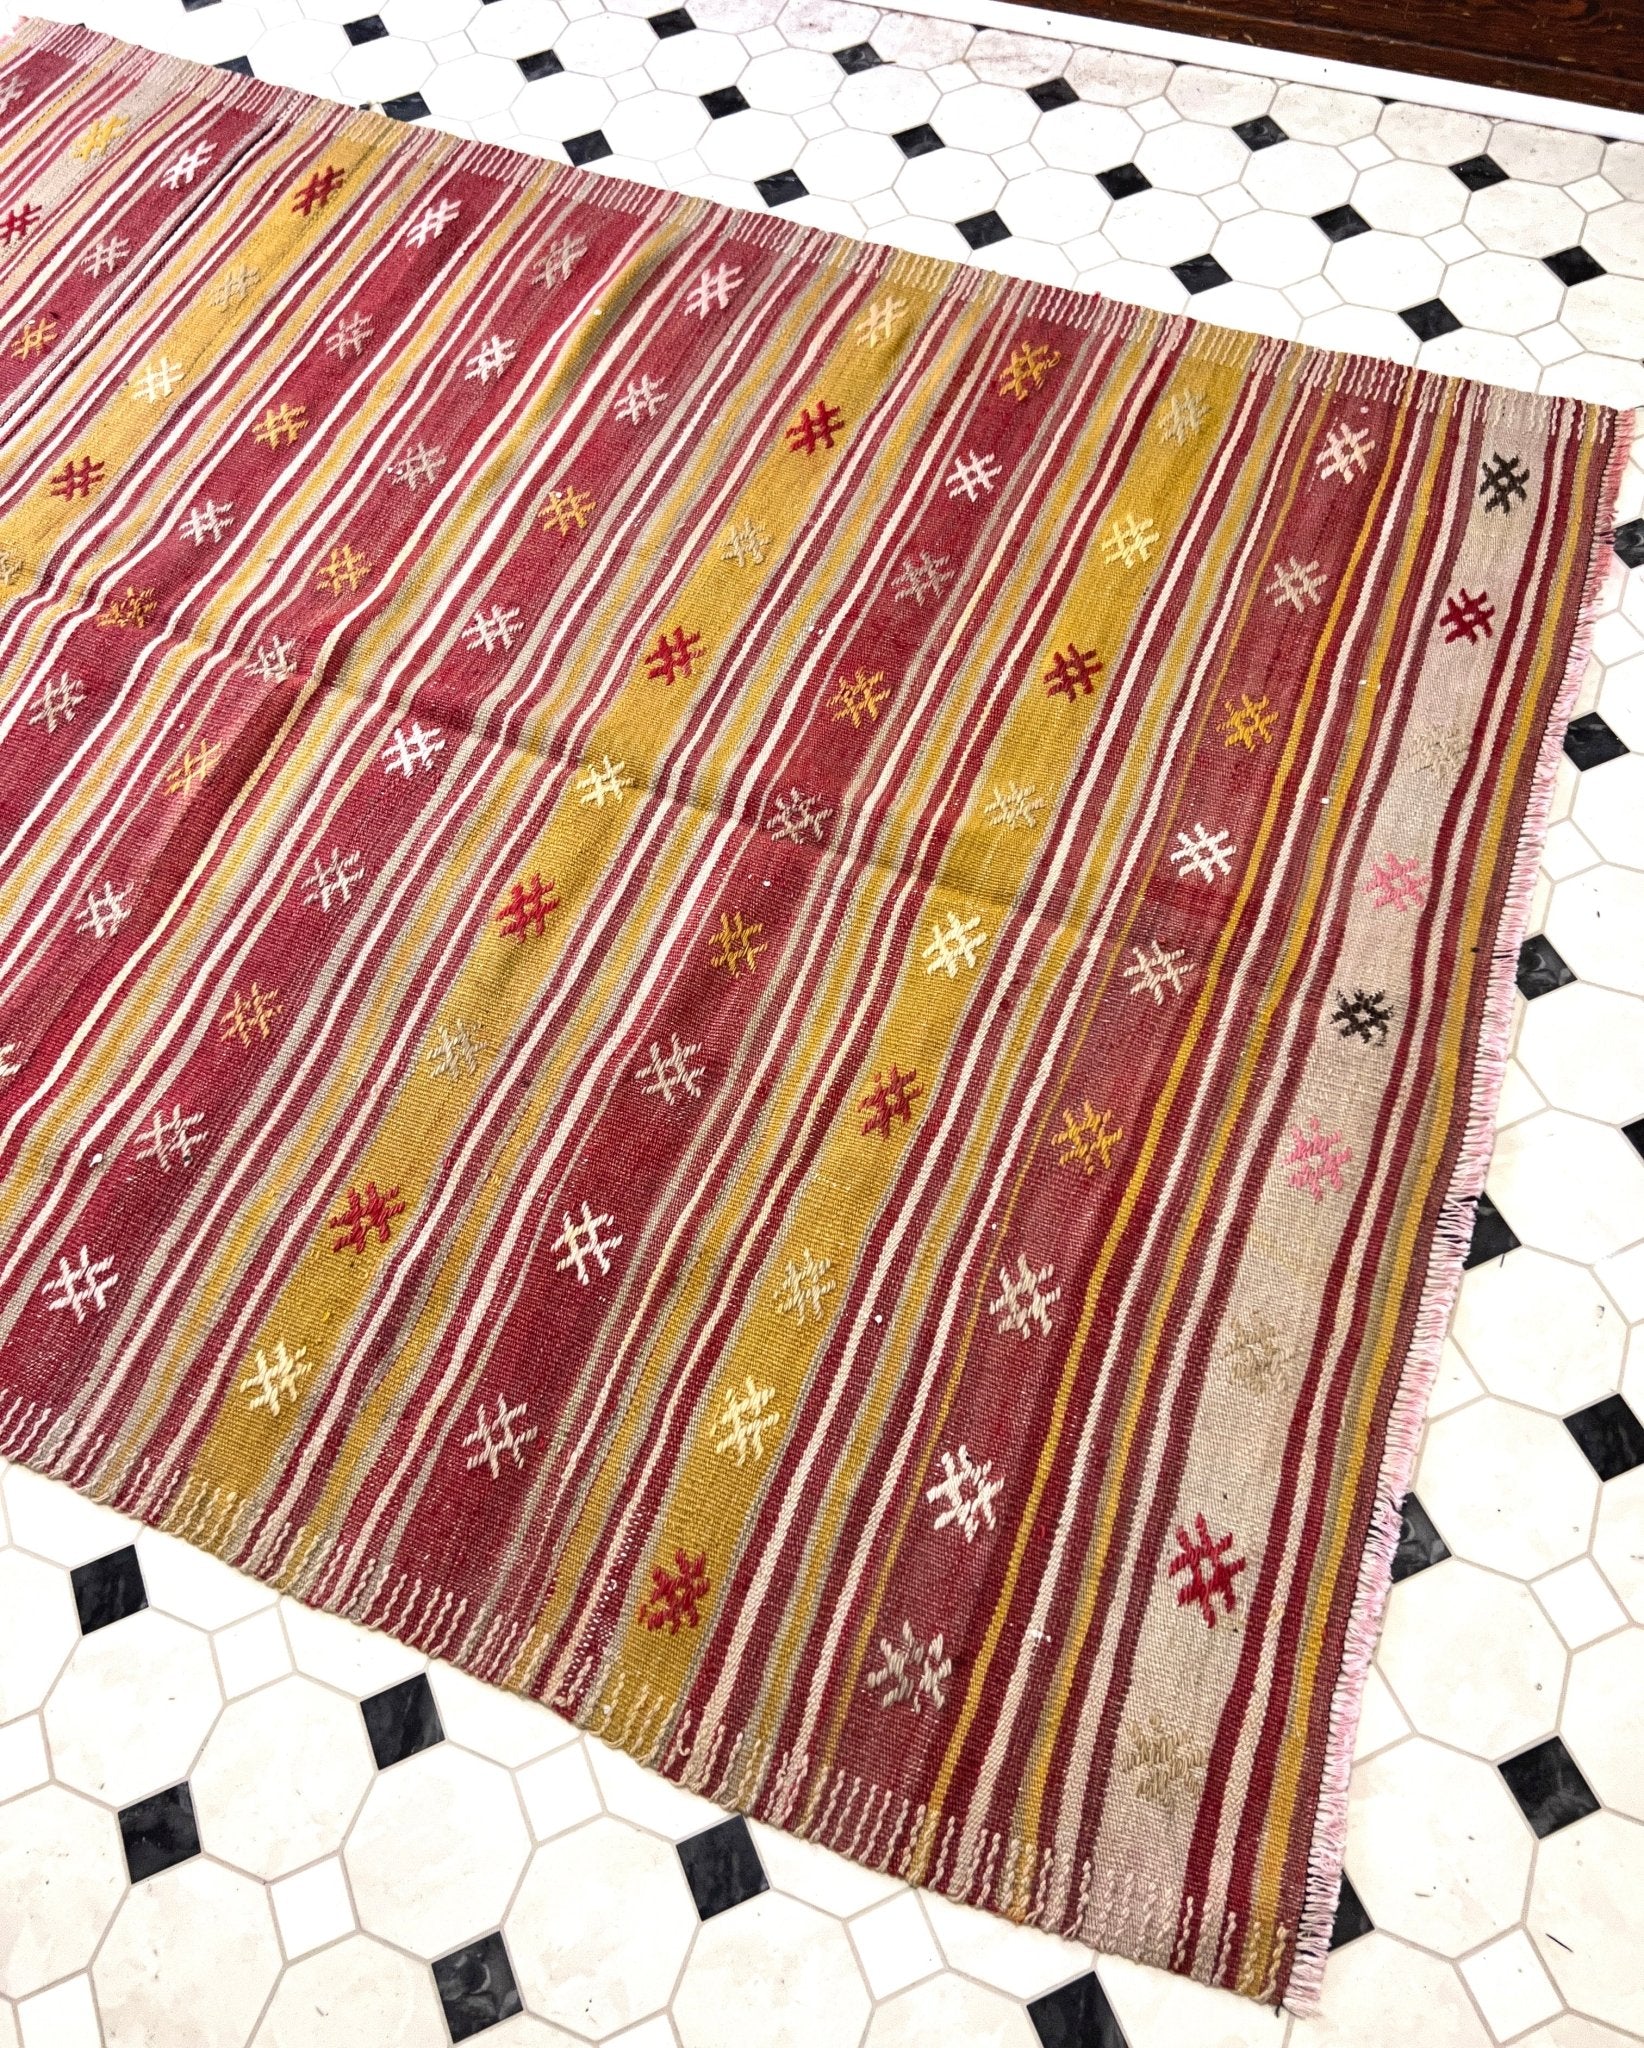 Pergamum Vintage Turkish Kilim rug shop berkeley. Oriental rug shop los gatos, palo alto. Buy Turkish kilim rug online